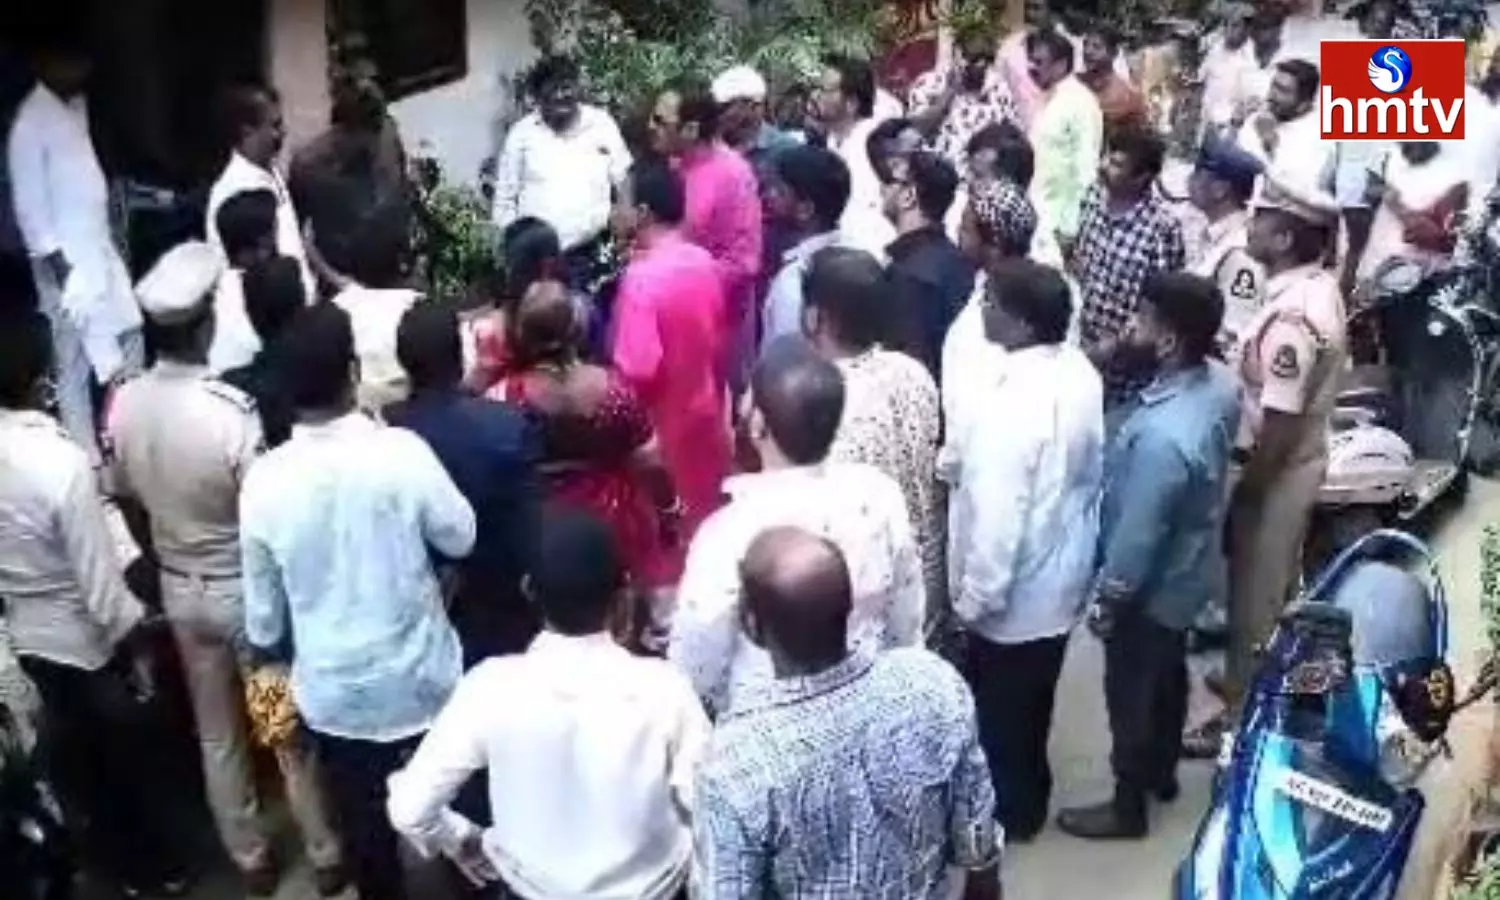 Jubilee Hills MLA Gopinath Attacks own Party Leaders